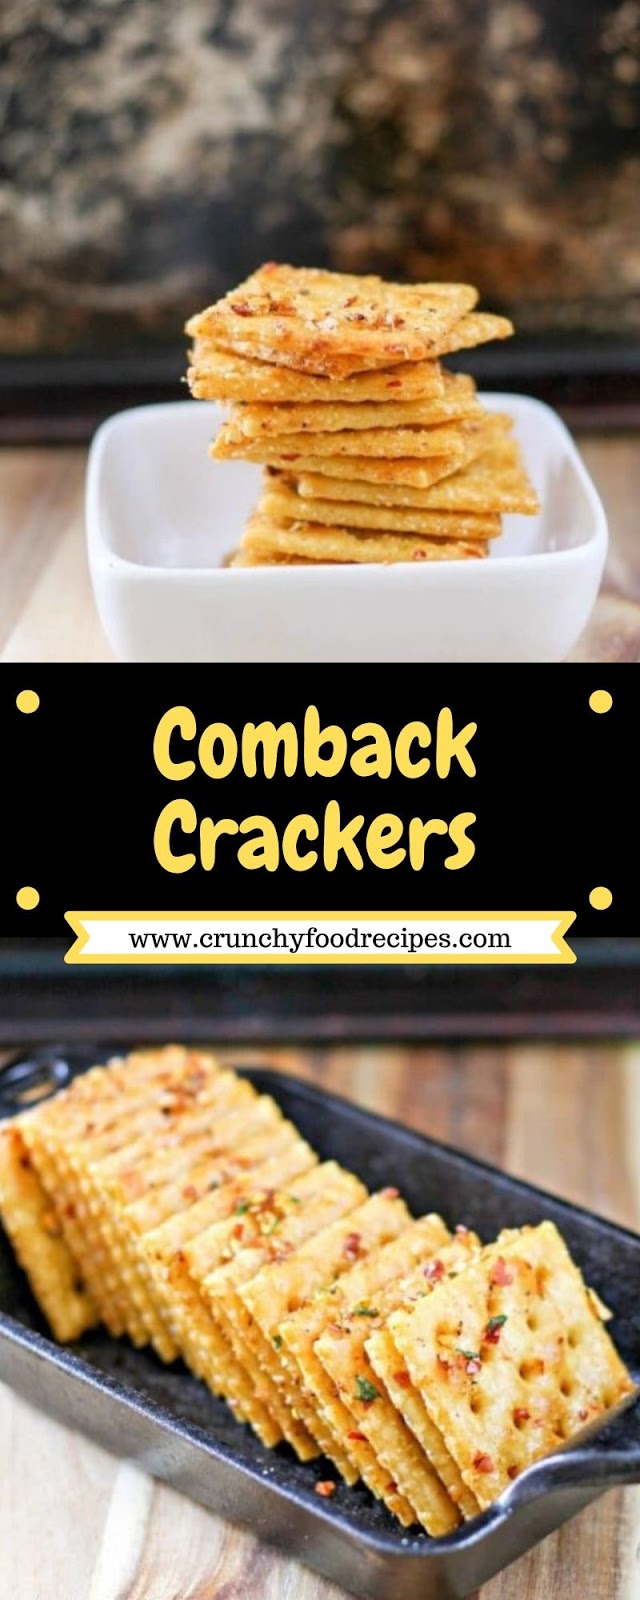 Comback Crackers